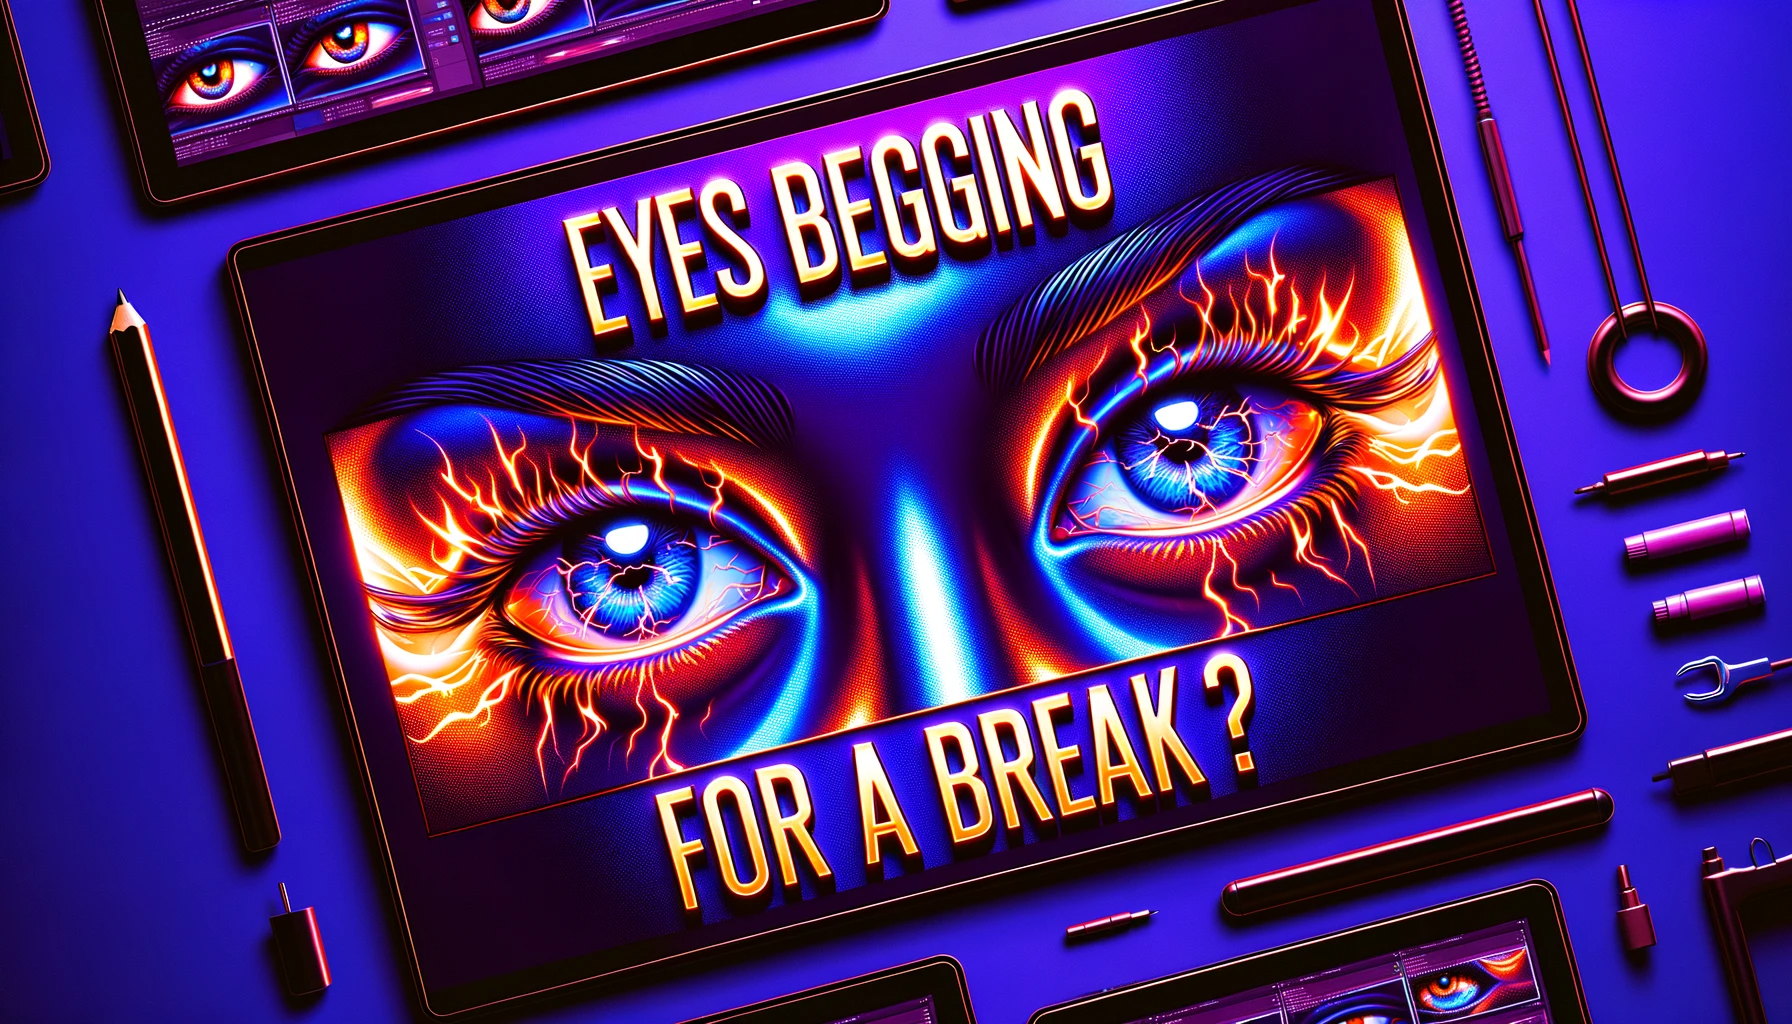 Eyes Begging for a Break?